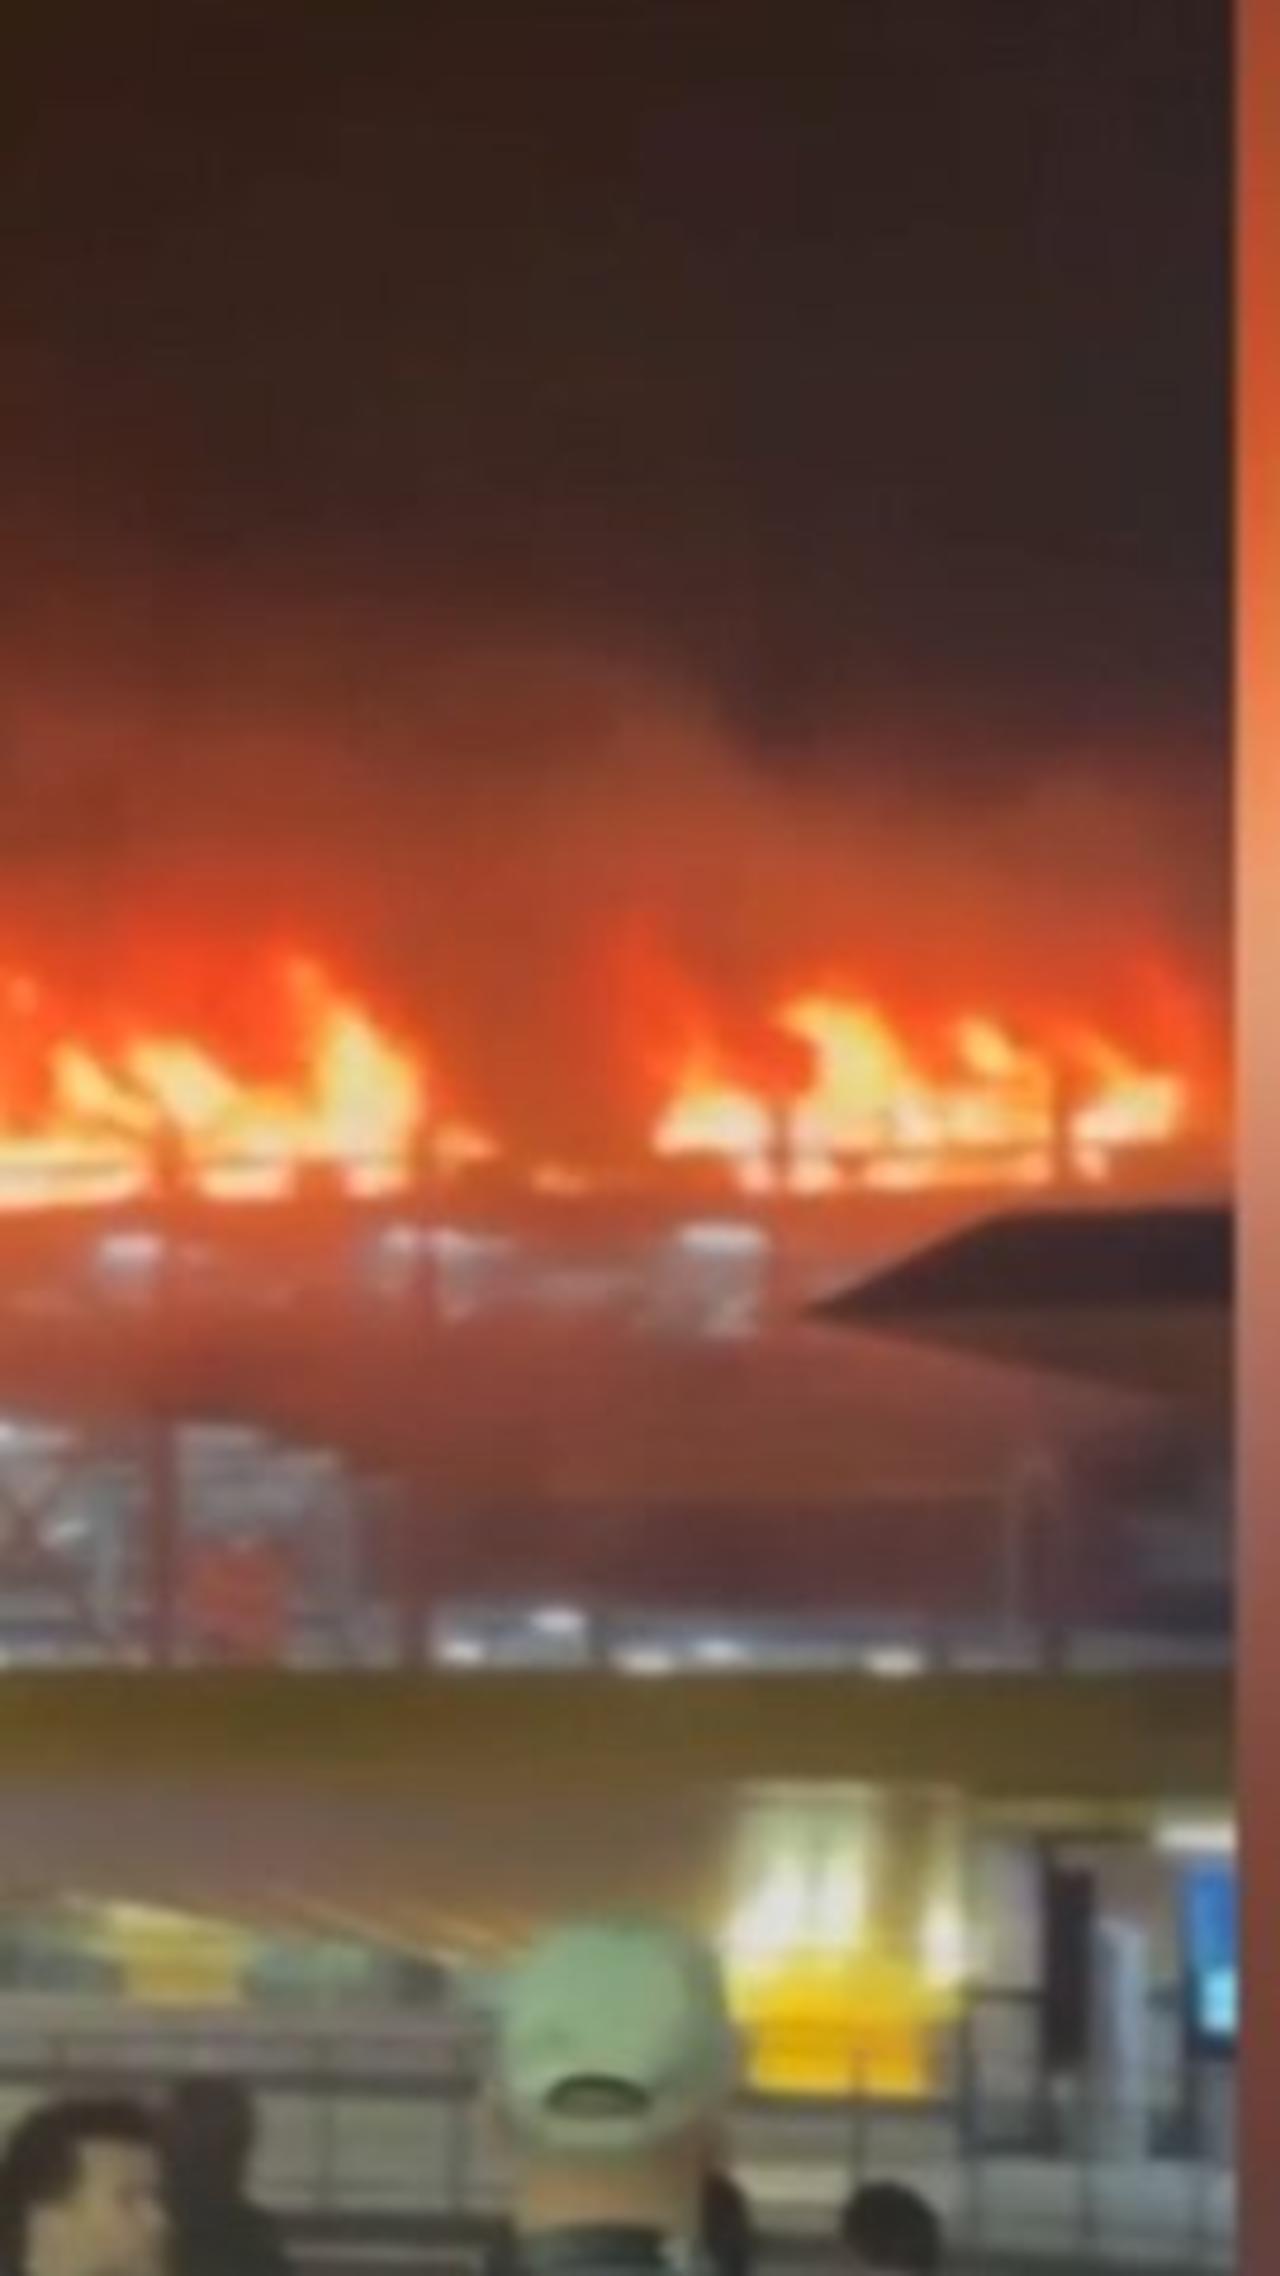 Luton Airport Fire #uk #london #luton #airport #fire